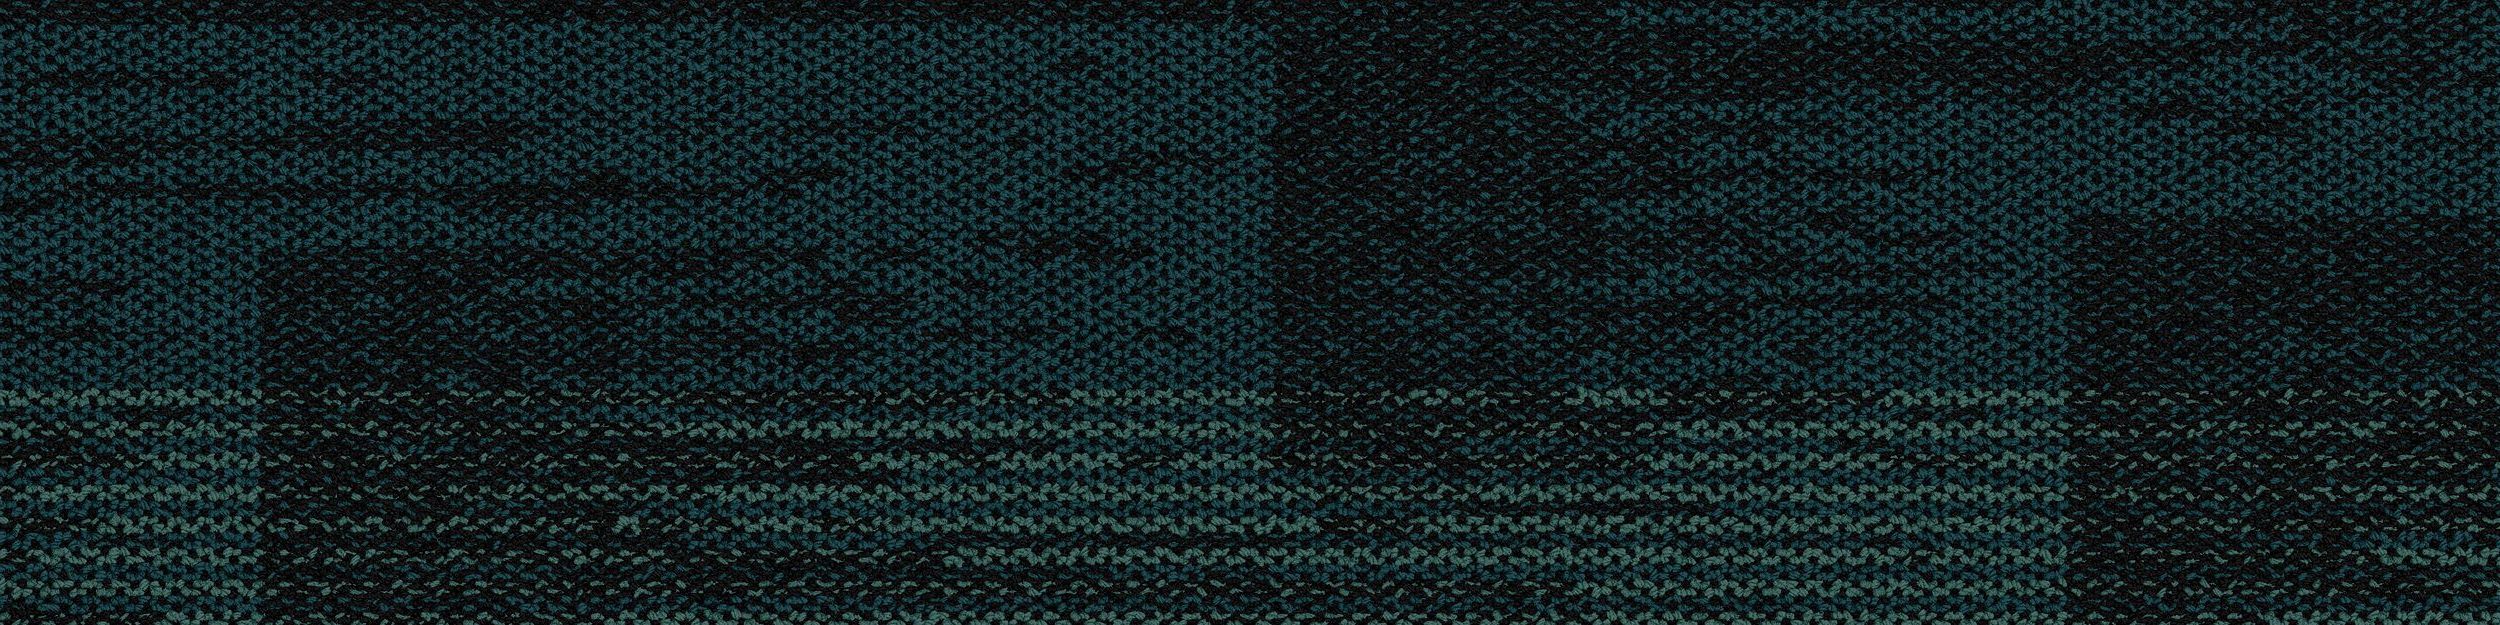 AE317 Carpet Tile In Emerald imagen número 2